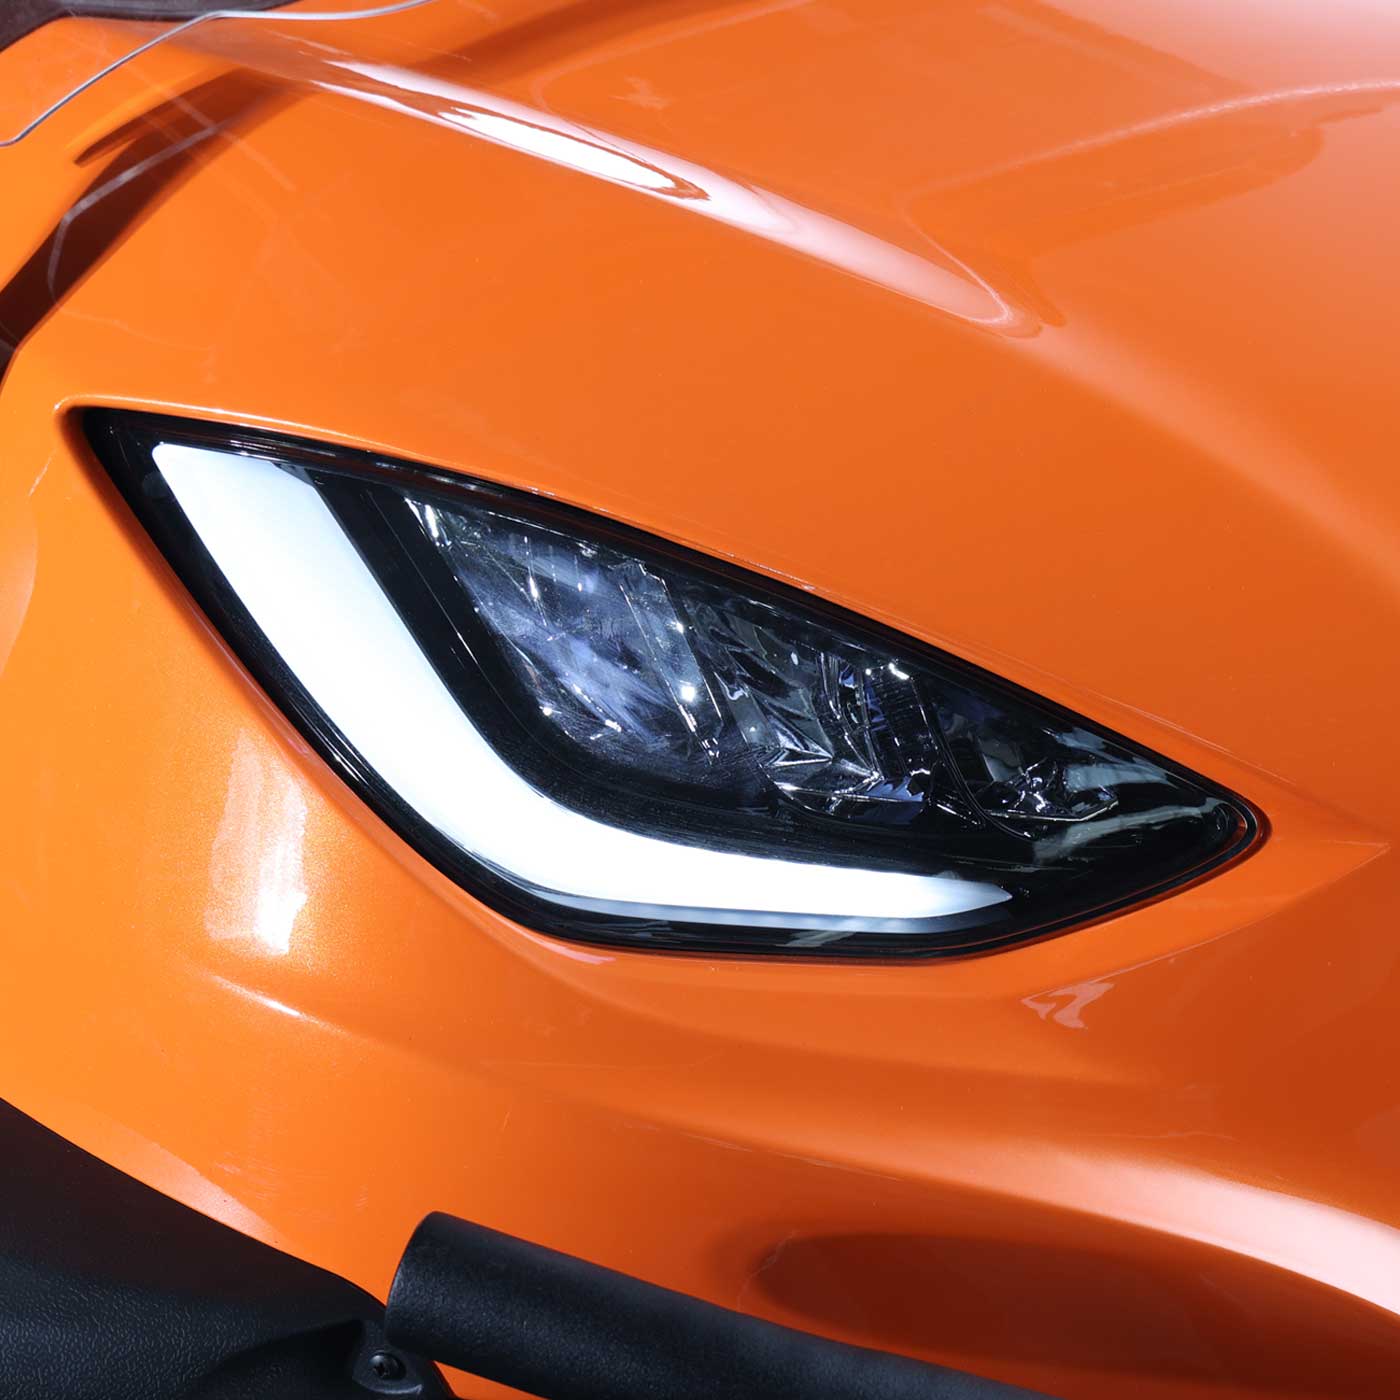 ActiveEV Pulse Golf Cart Metallic Orange with LED Headlights